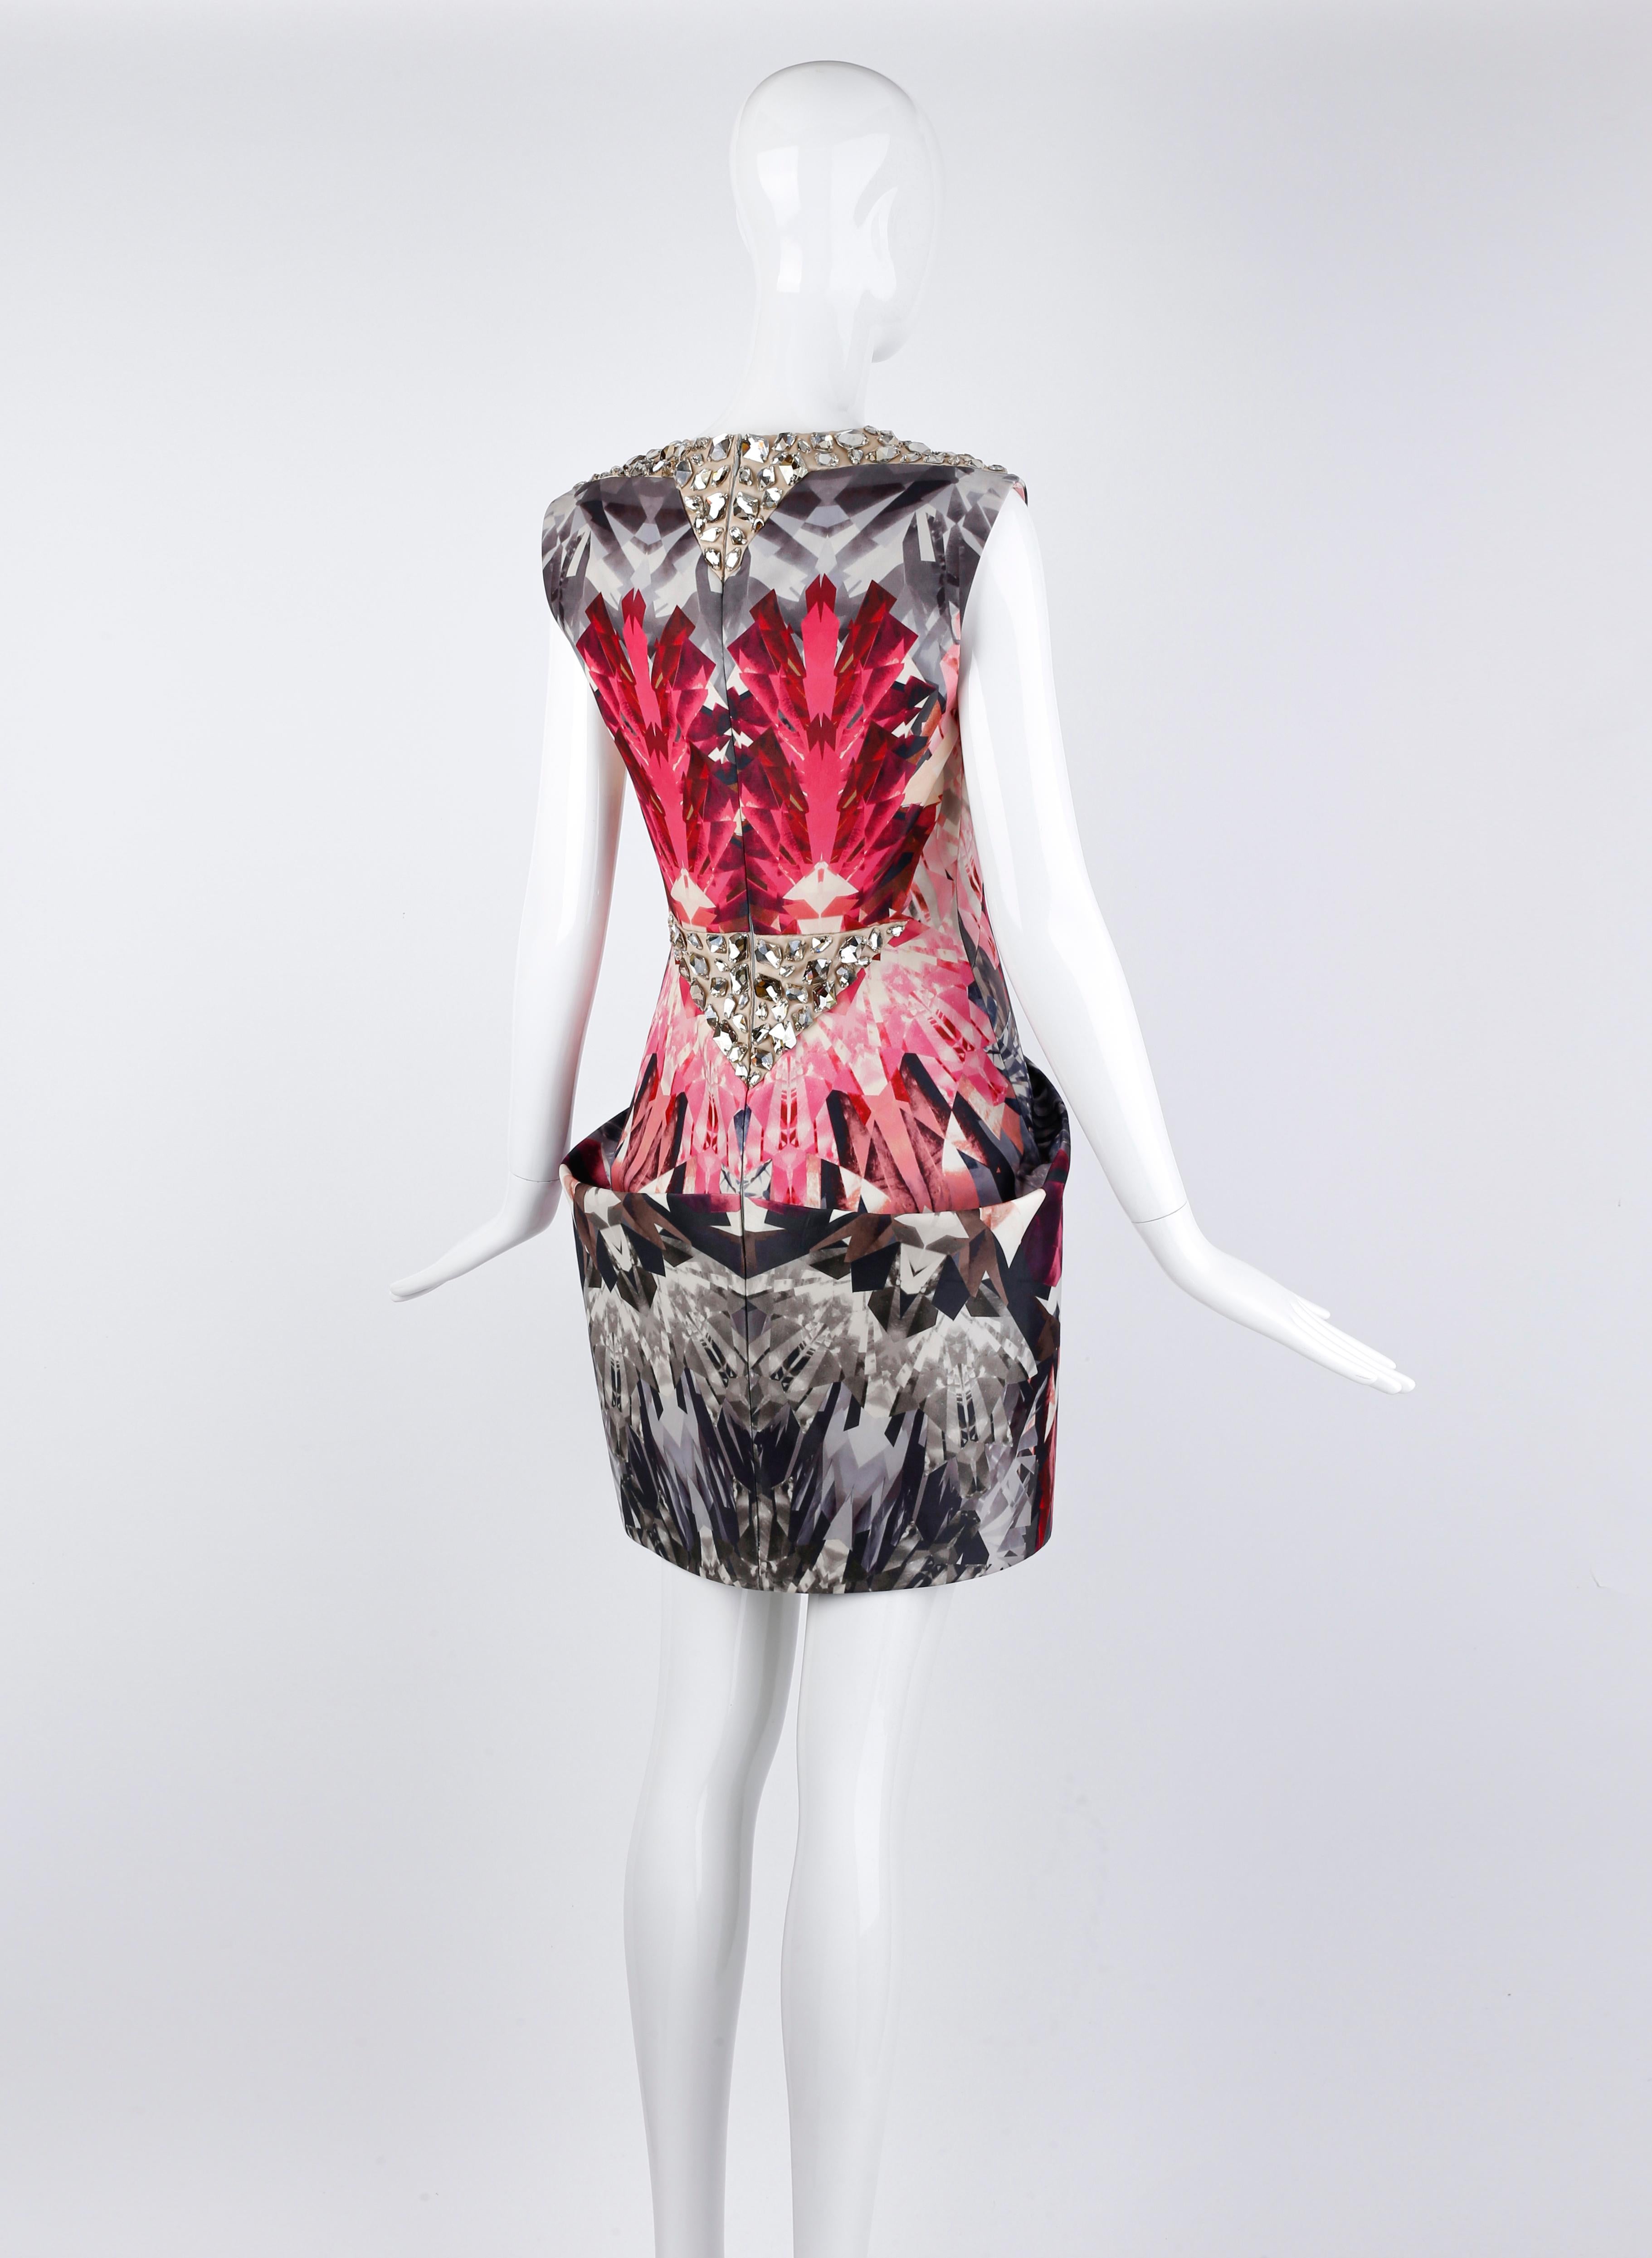 Women's Alexander McQueen S/S 2009 Swarovski Crystal Structured Kaleidoscope Mini Dress For Sale